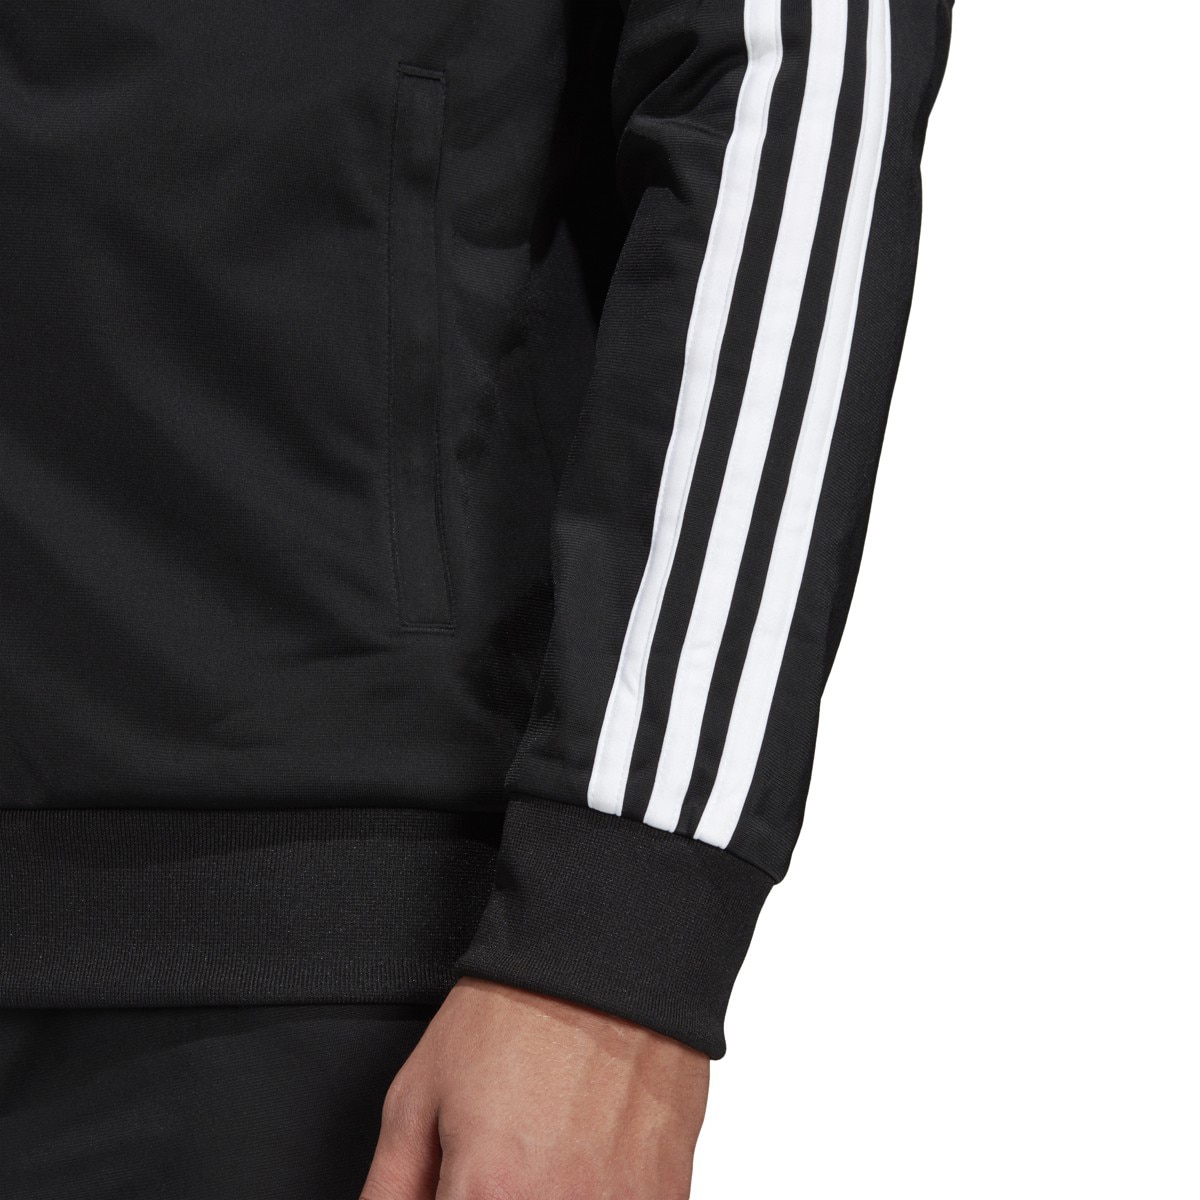 Adidas Essentials 3 Stripe Men's Track Jacket DQ3070 - Black, White - image 3 of 8